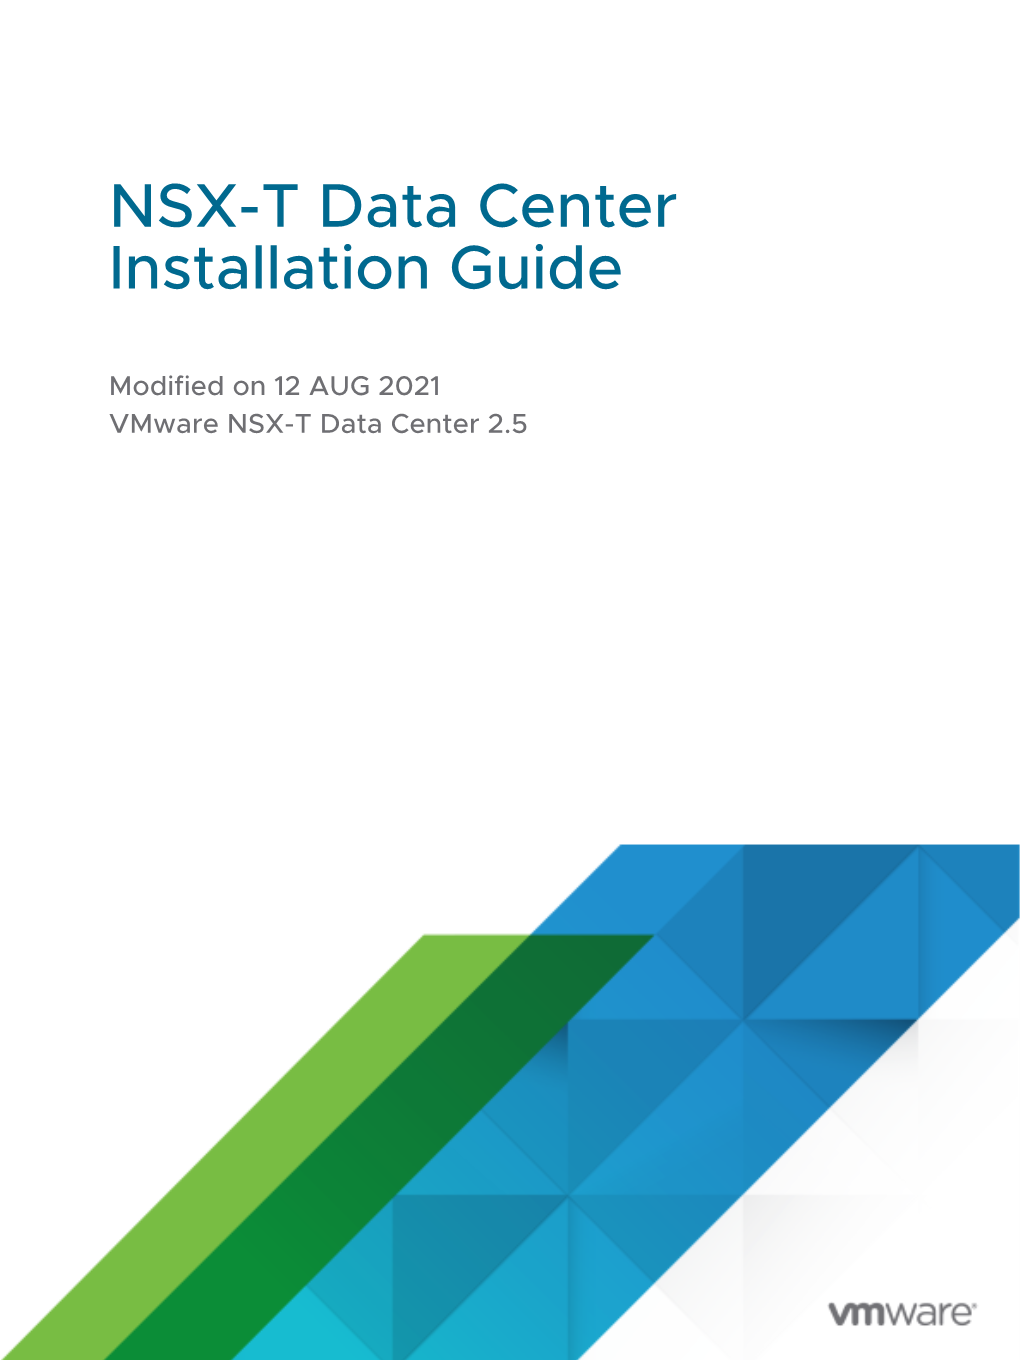 NSX-T Data Center Installation Guide